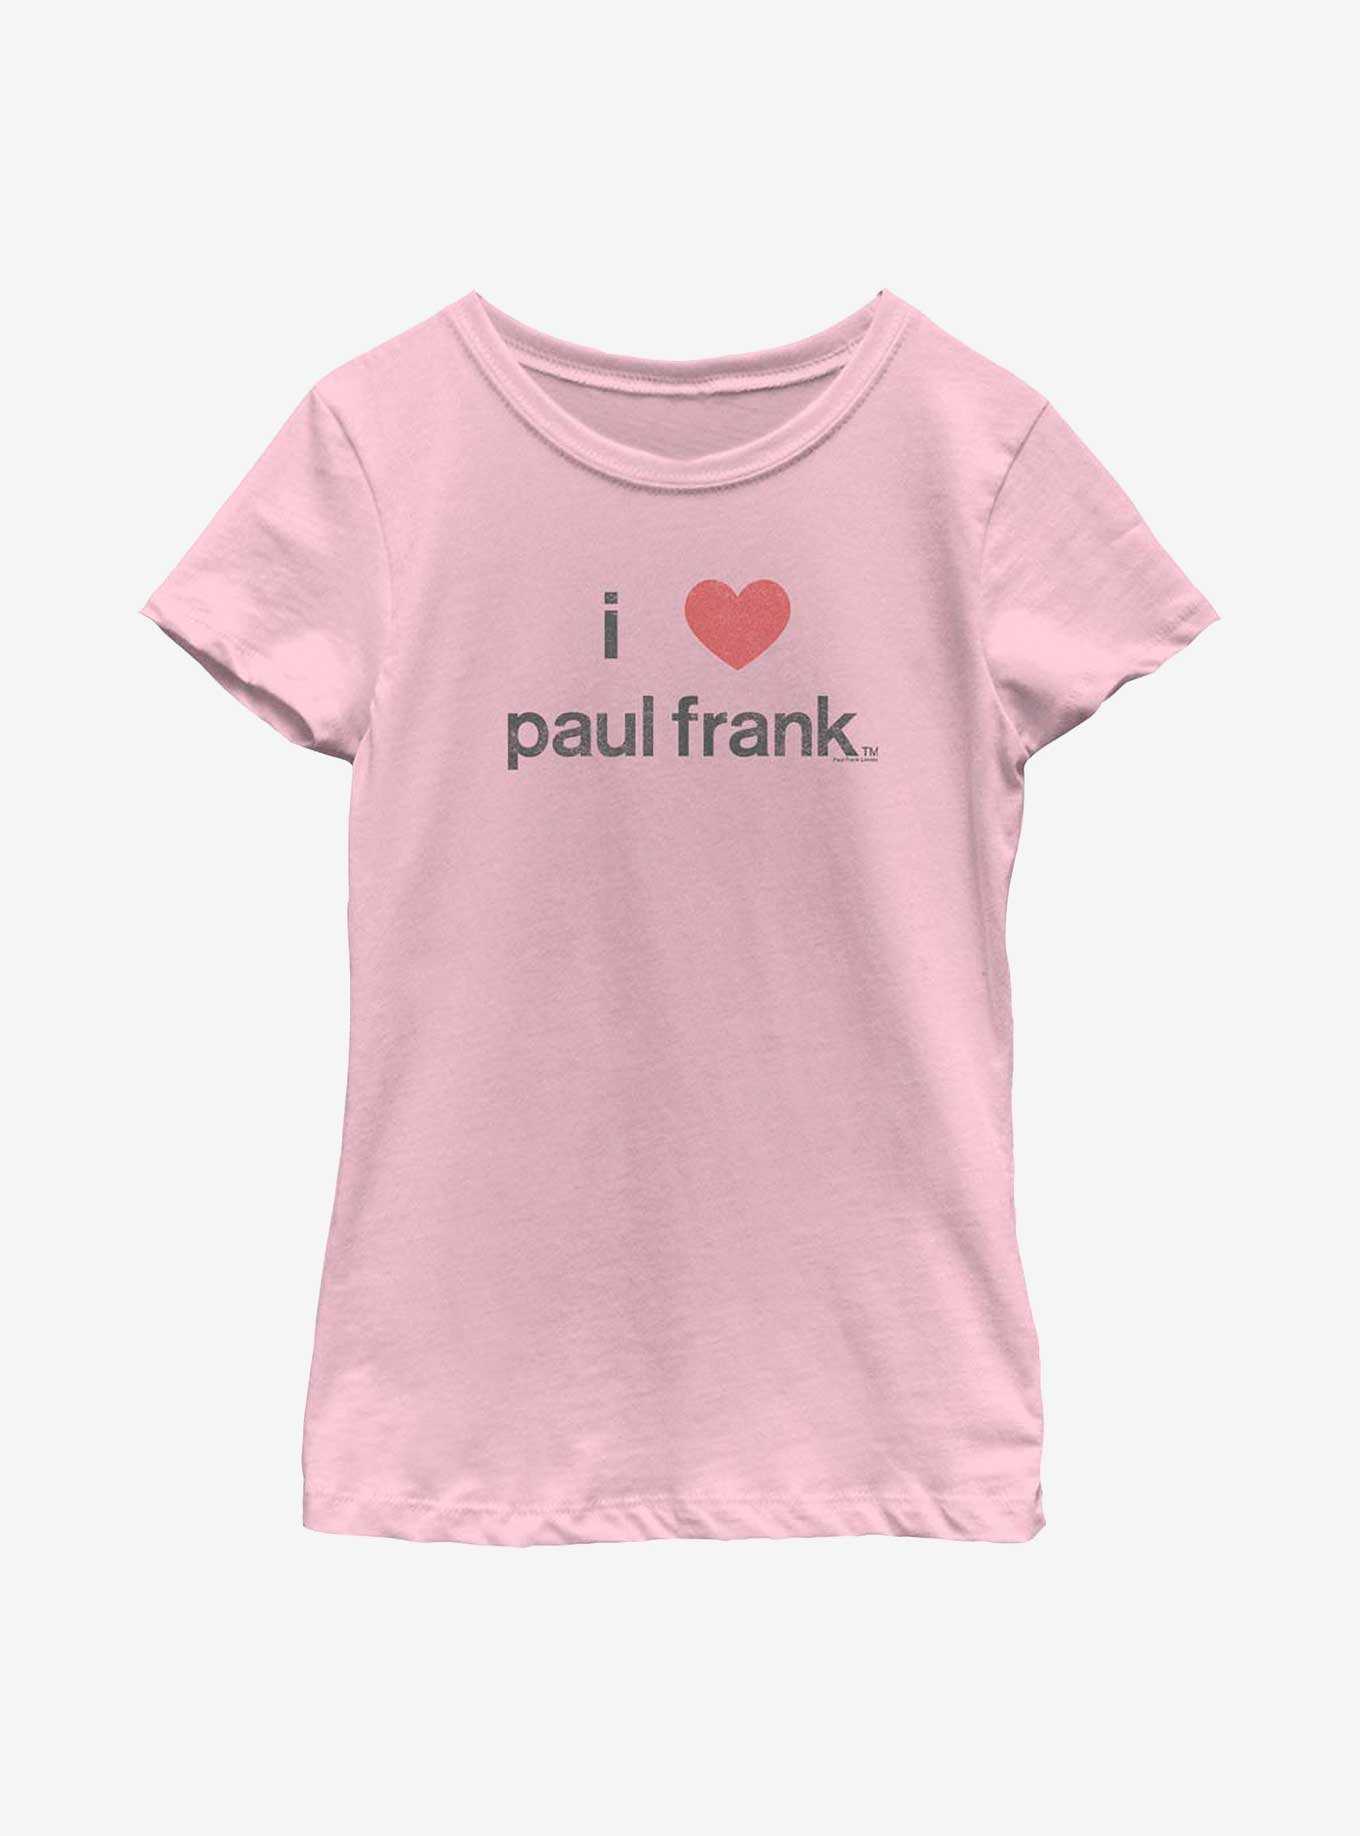 Paul Frank I Heart Paul Frank Youth Girls T-Shirt, , hi-res